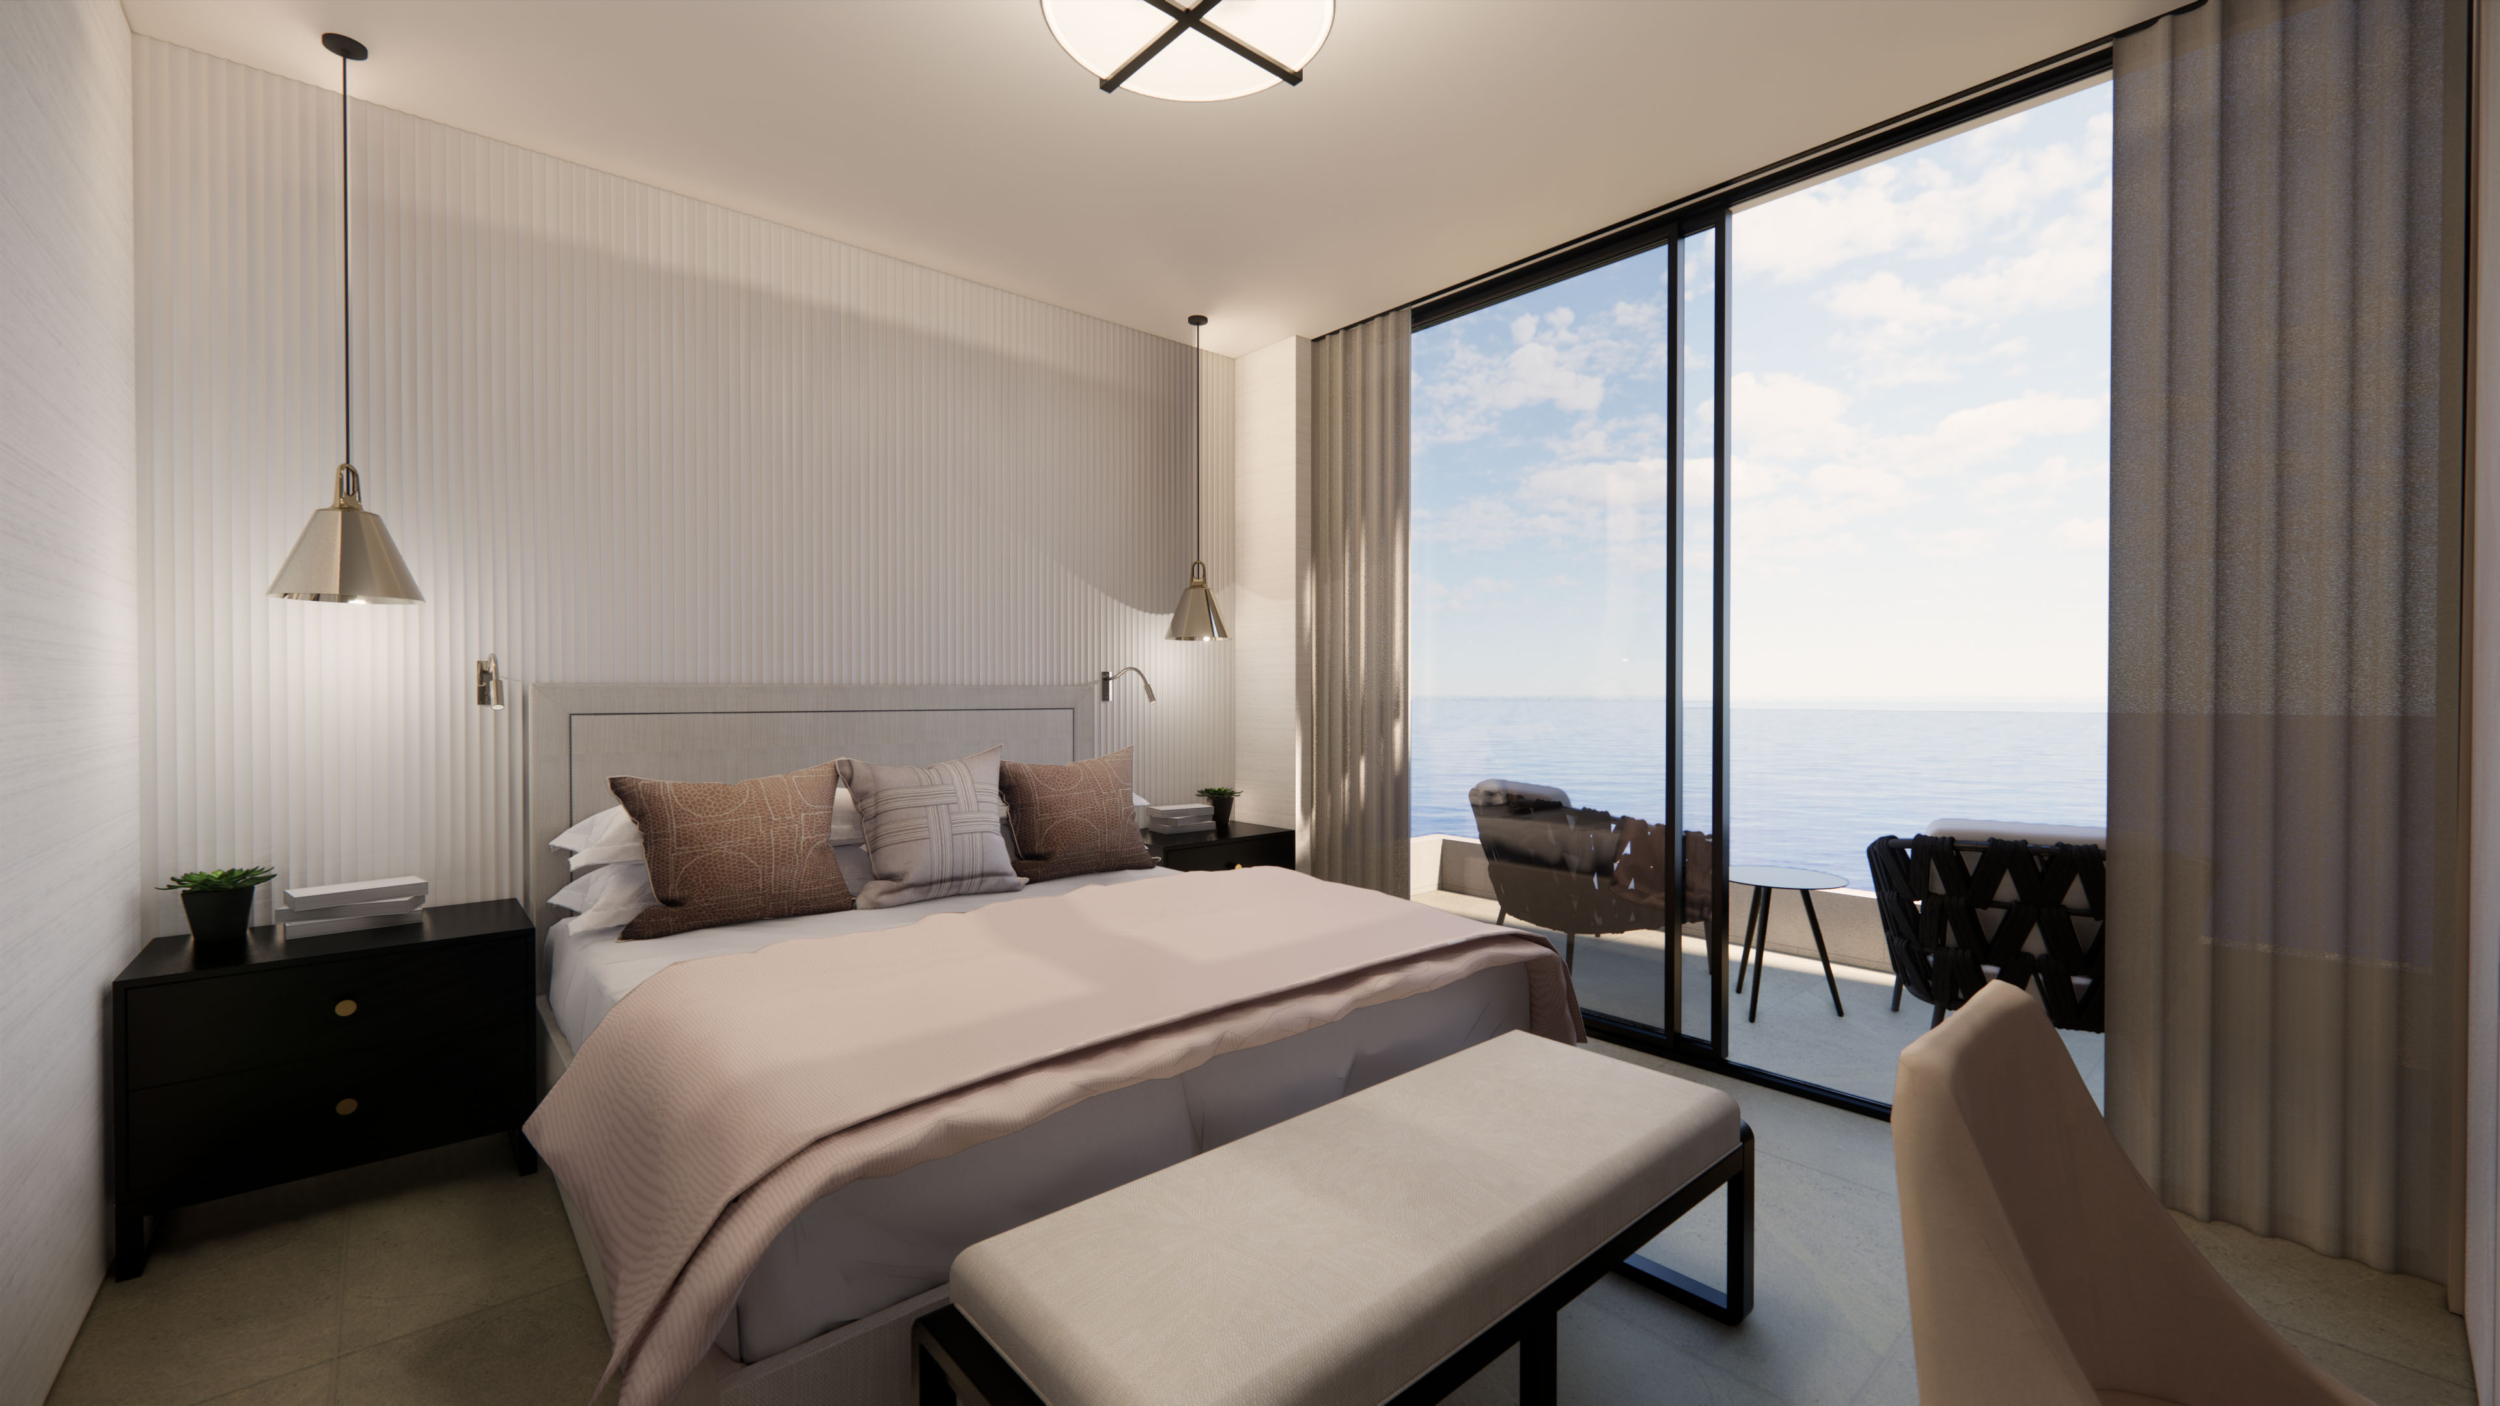 Villa Sapphire, Luxury Bedroom CGI, Linear CGI Studio